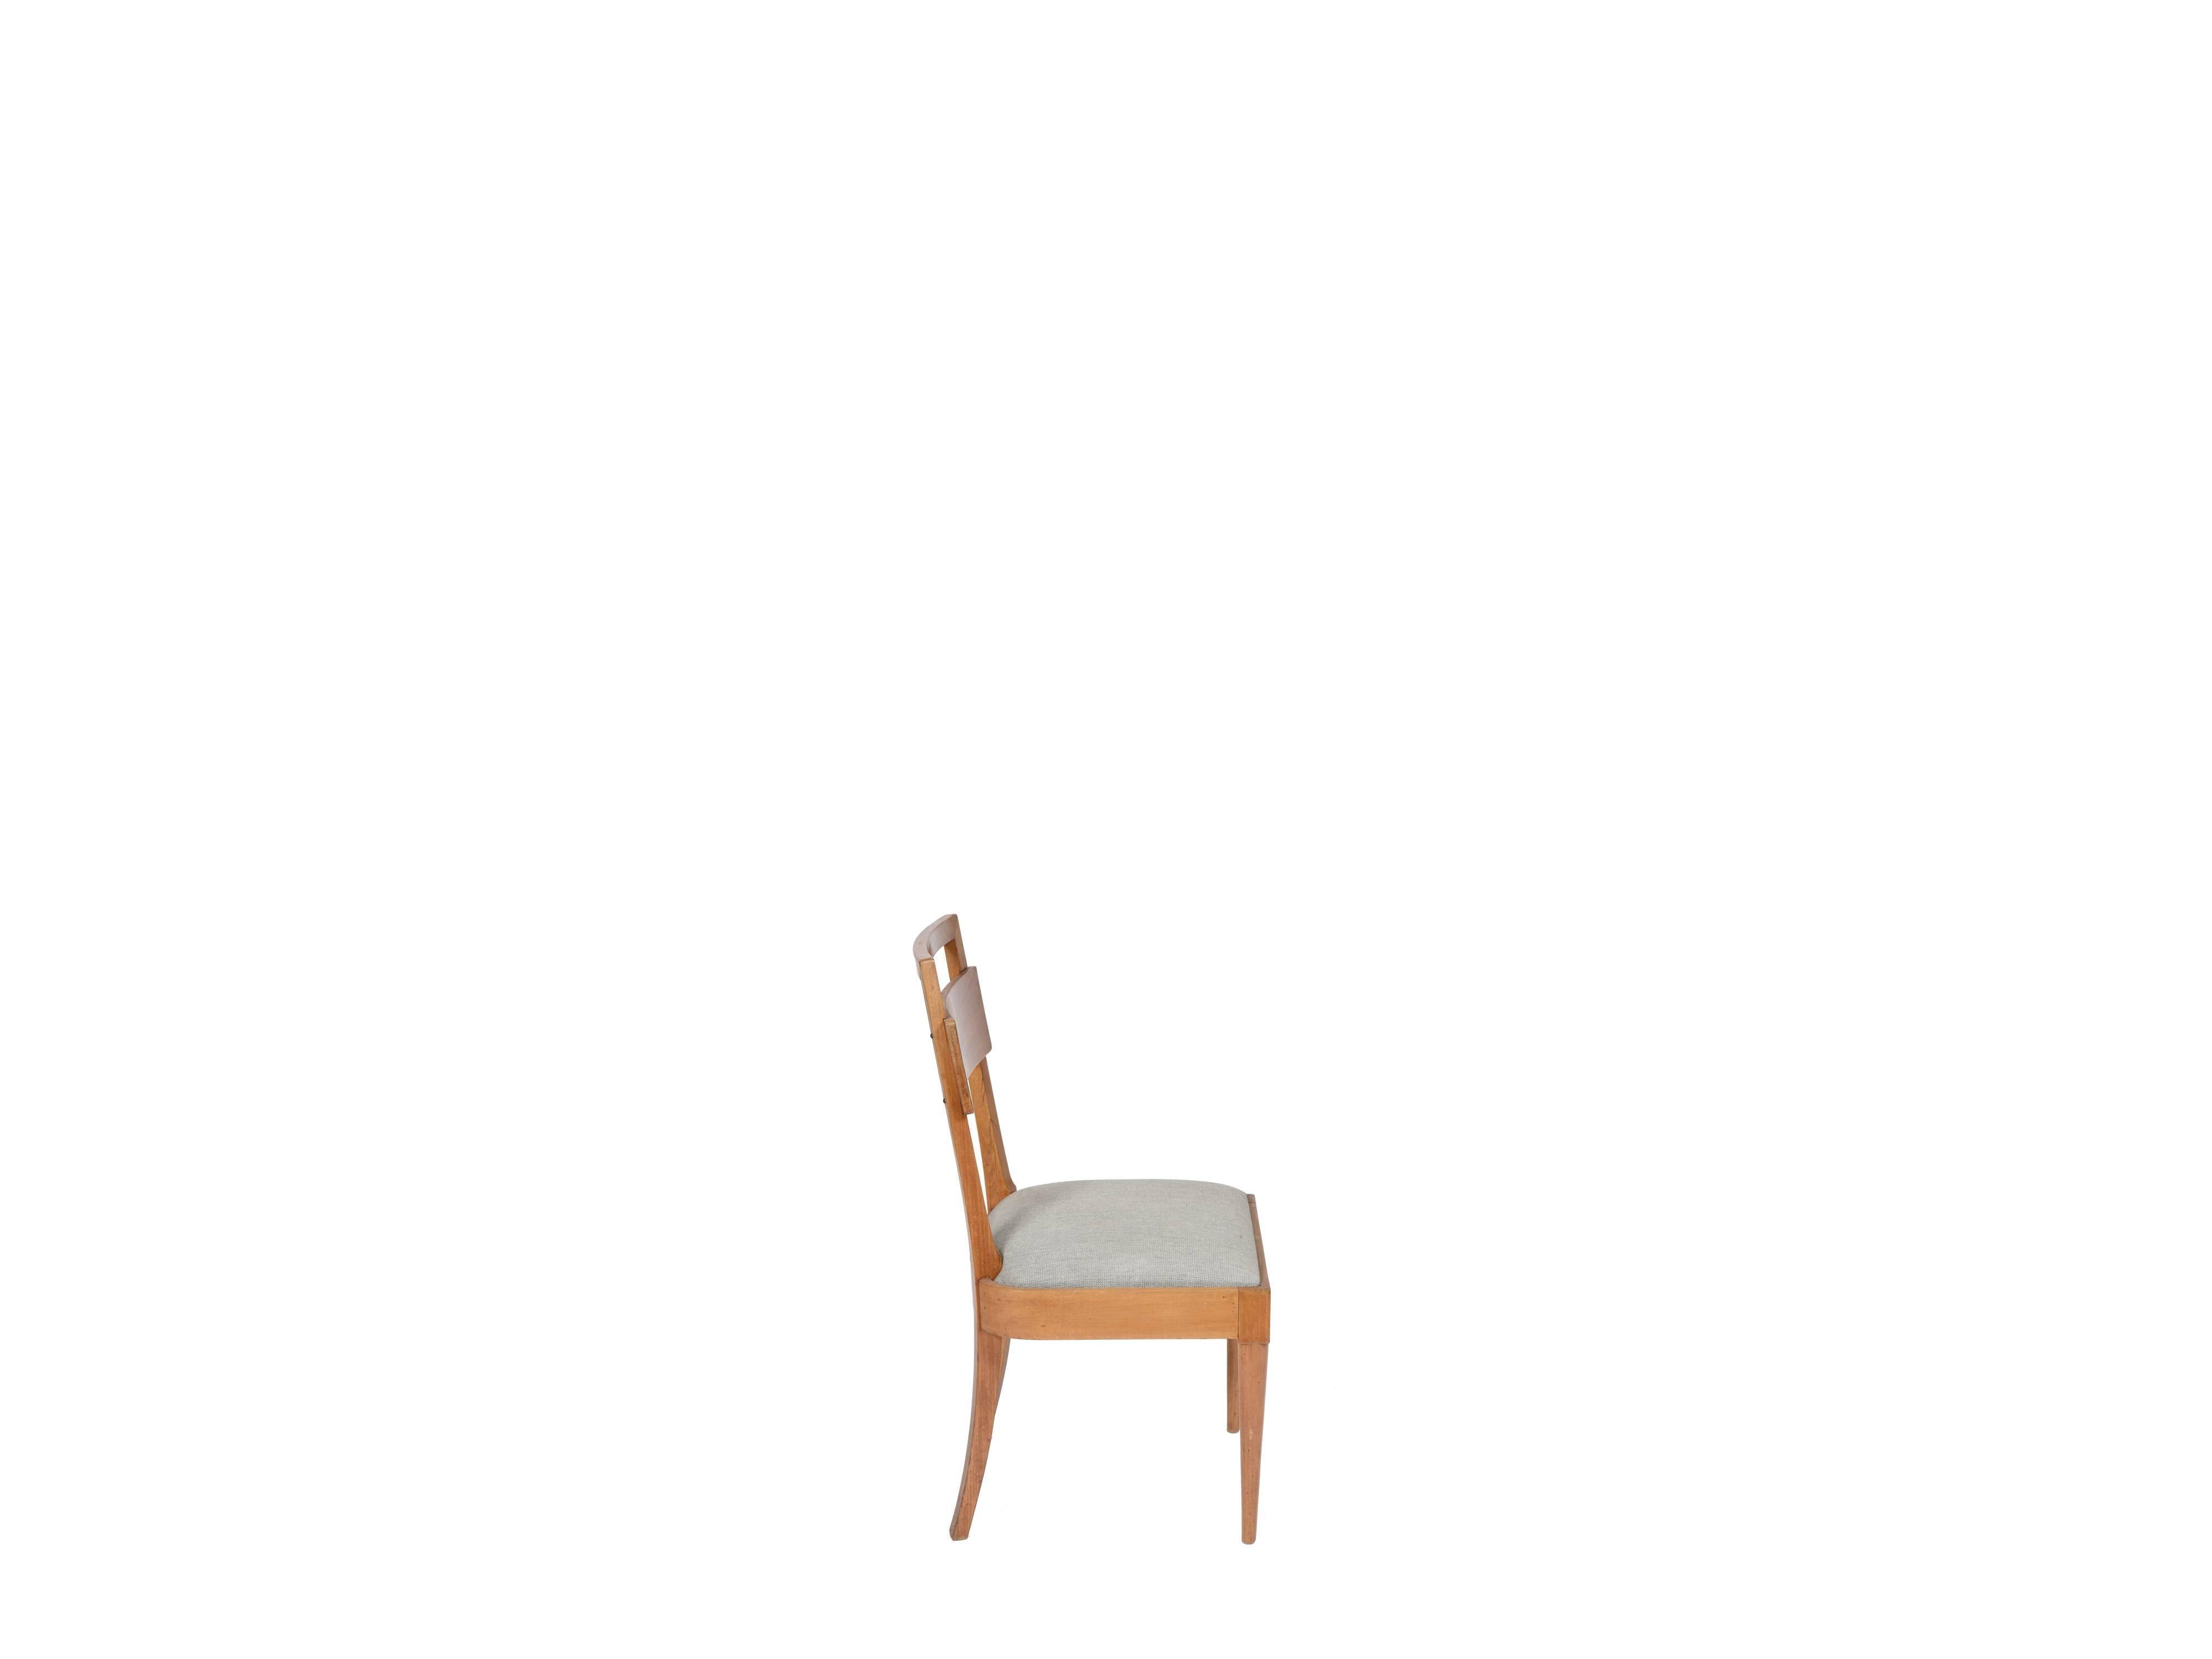 Brazilian Teperman Midcentury brazilian chair in Ivory Wood, 1960s